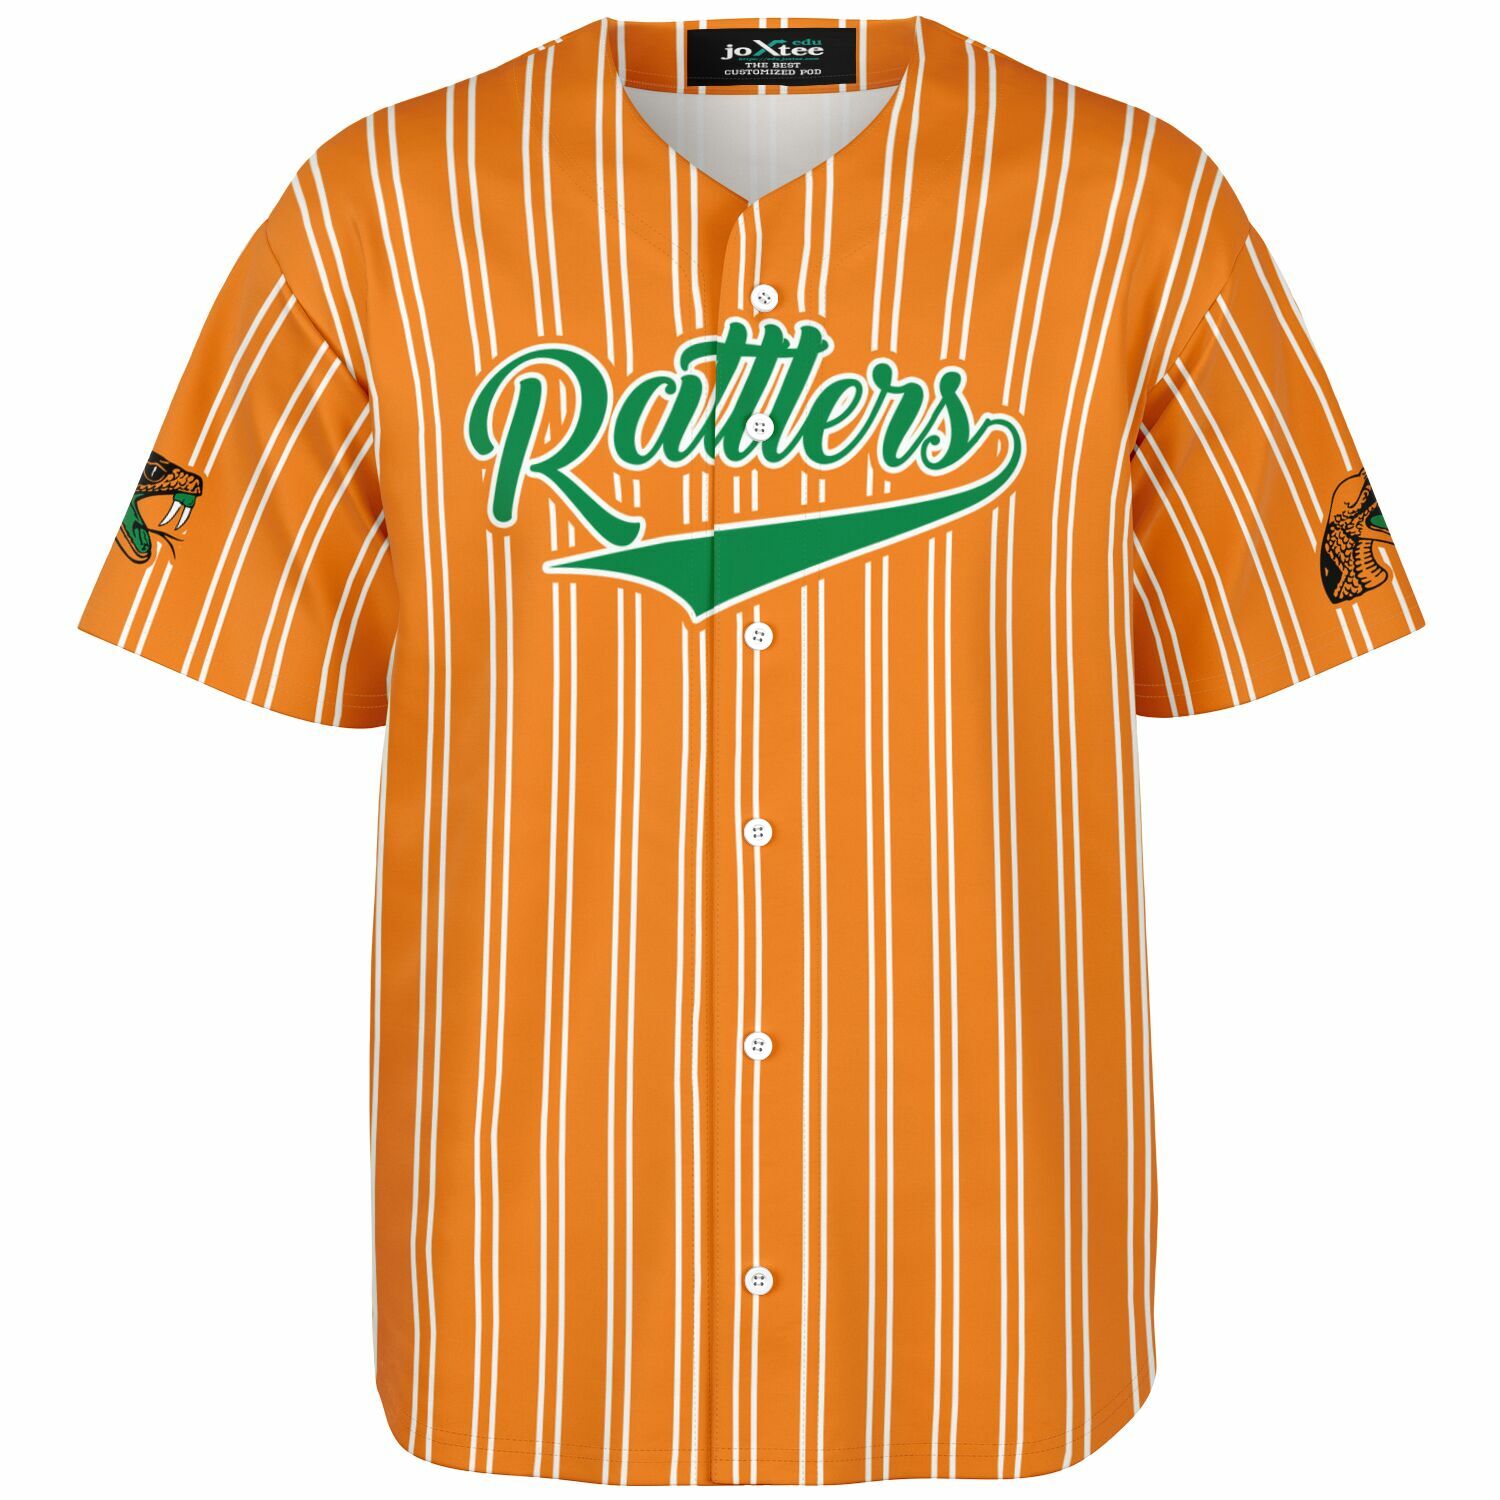 Rattlers custom baseball jersey Orange Famu 00